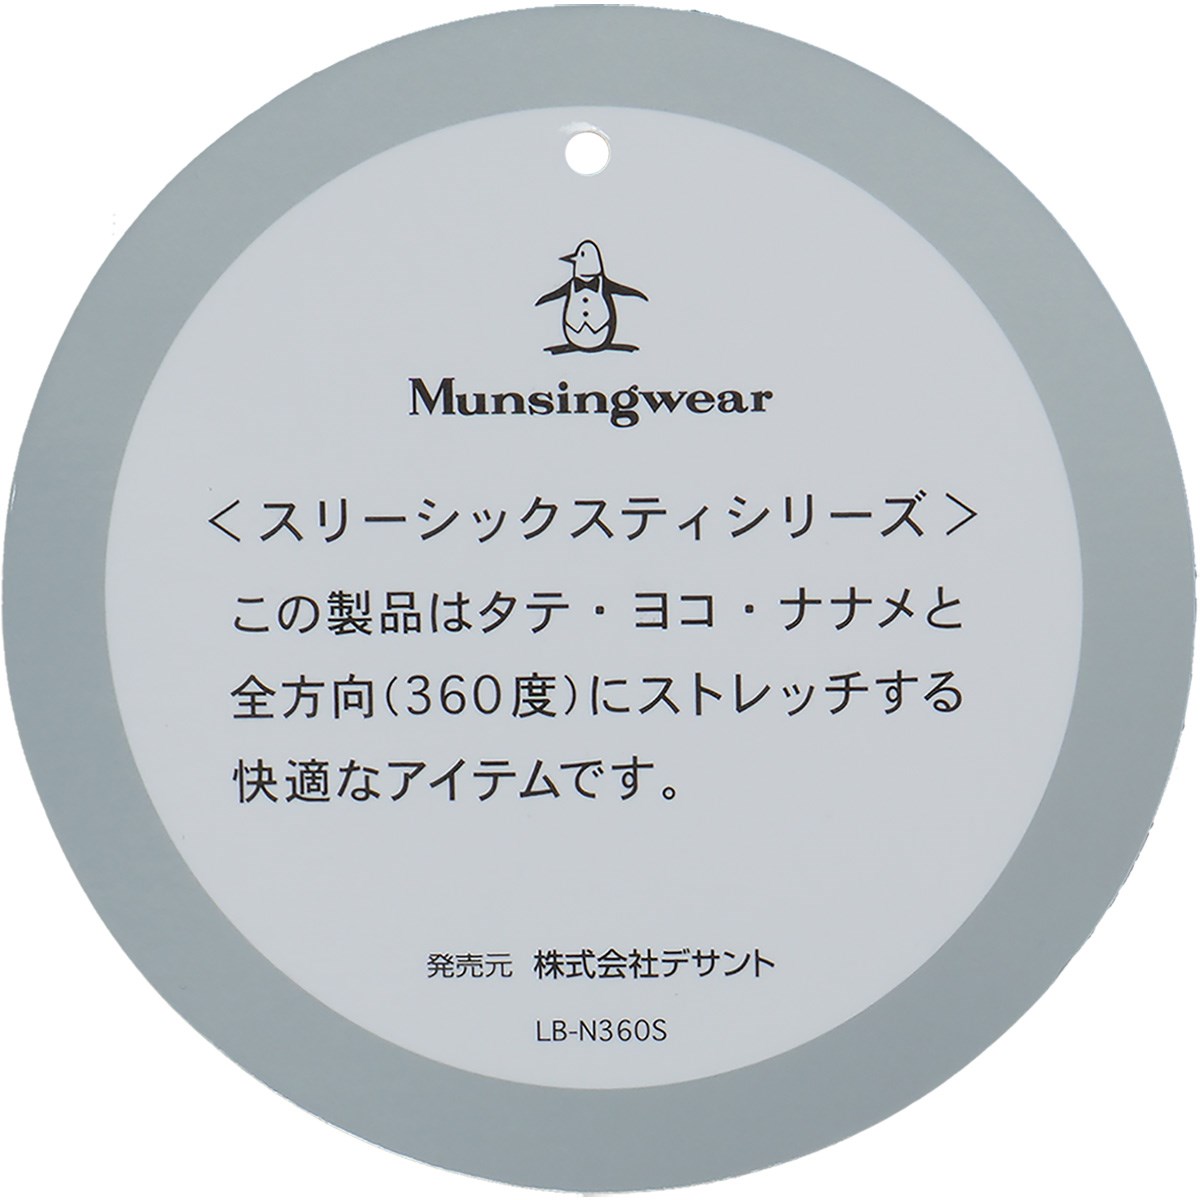 FUSION MOVE エンボスロゴ  新しいスタイル マンシングウェア Munsingwear  ストレッチブルゾン